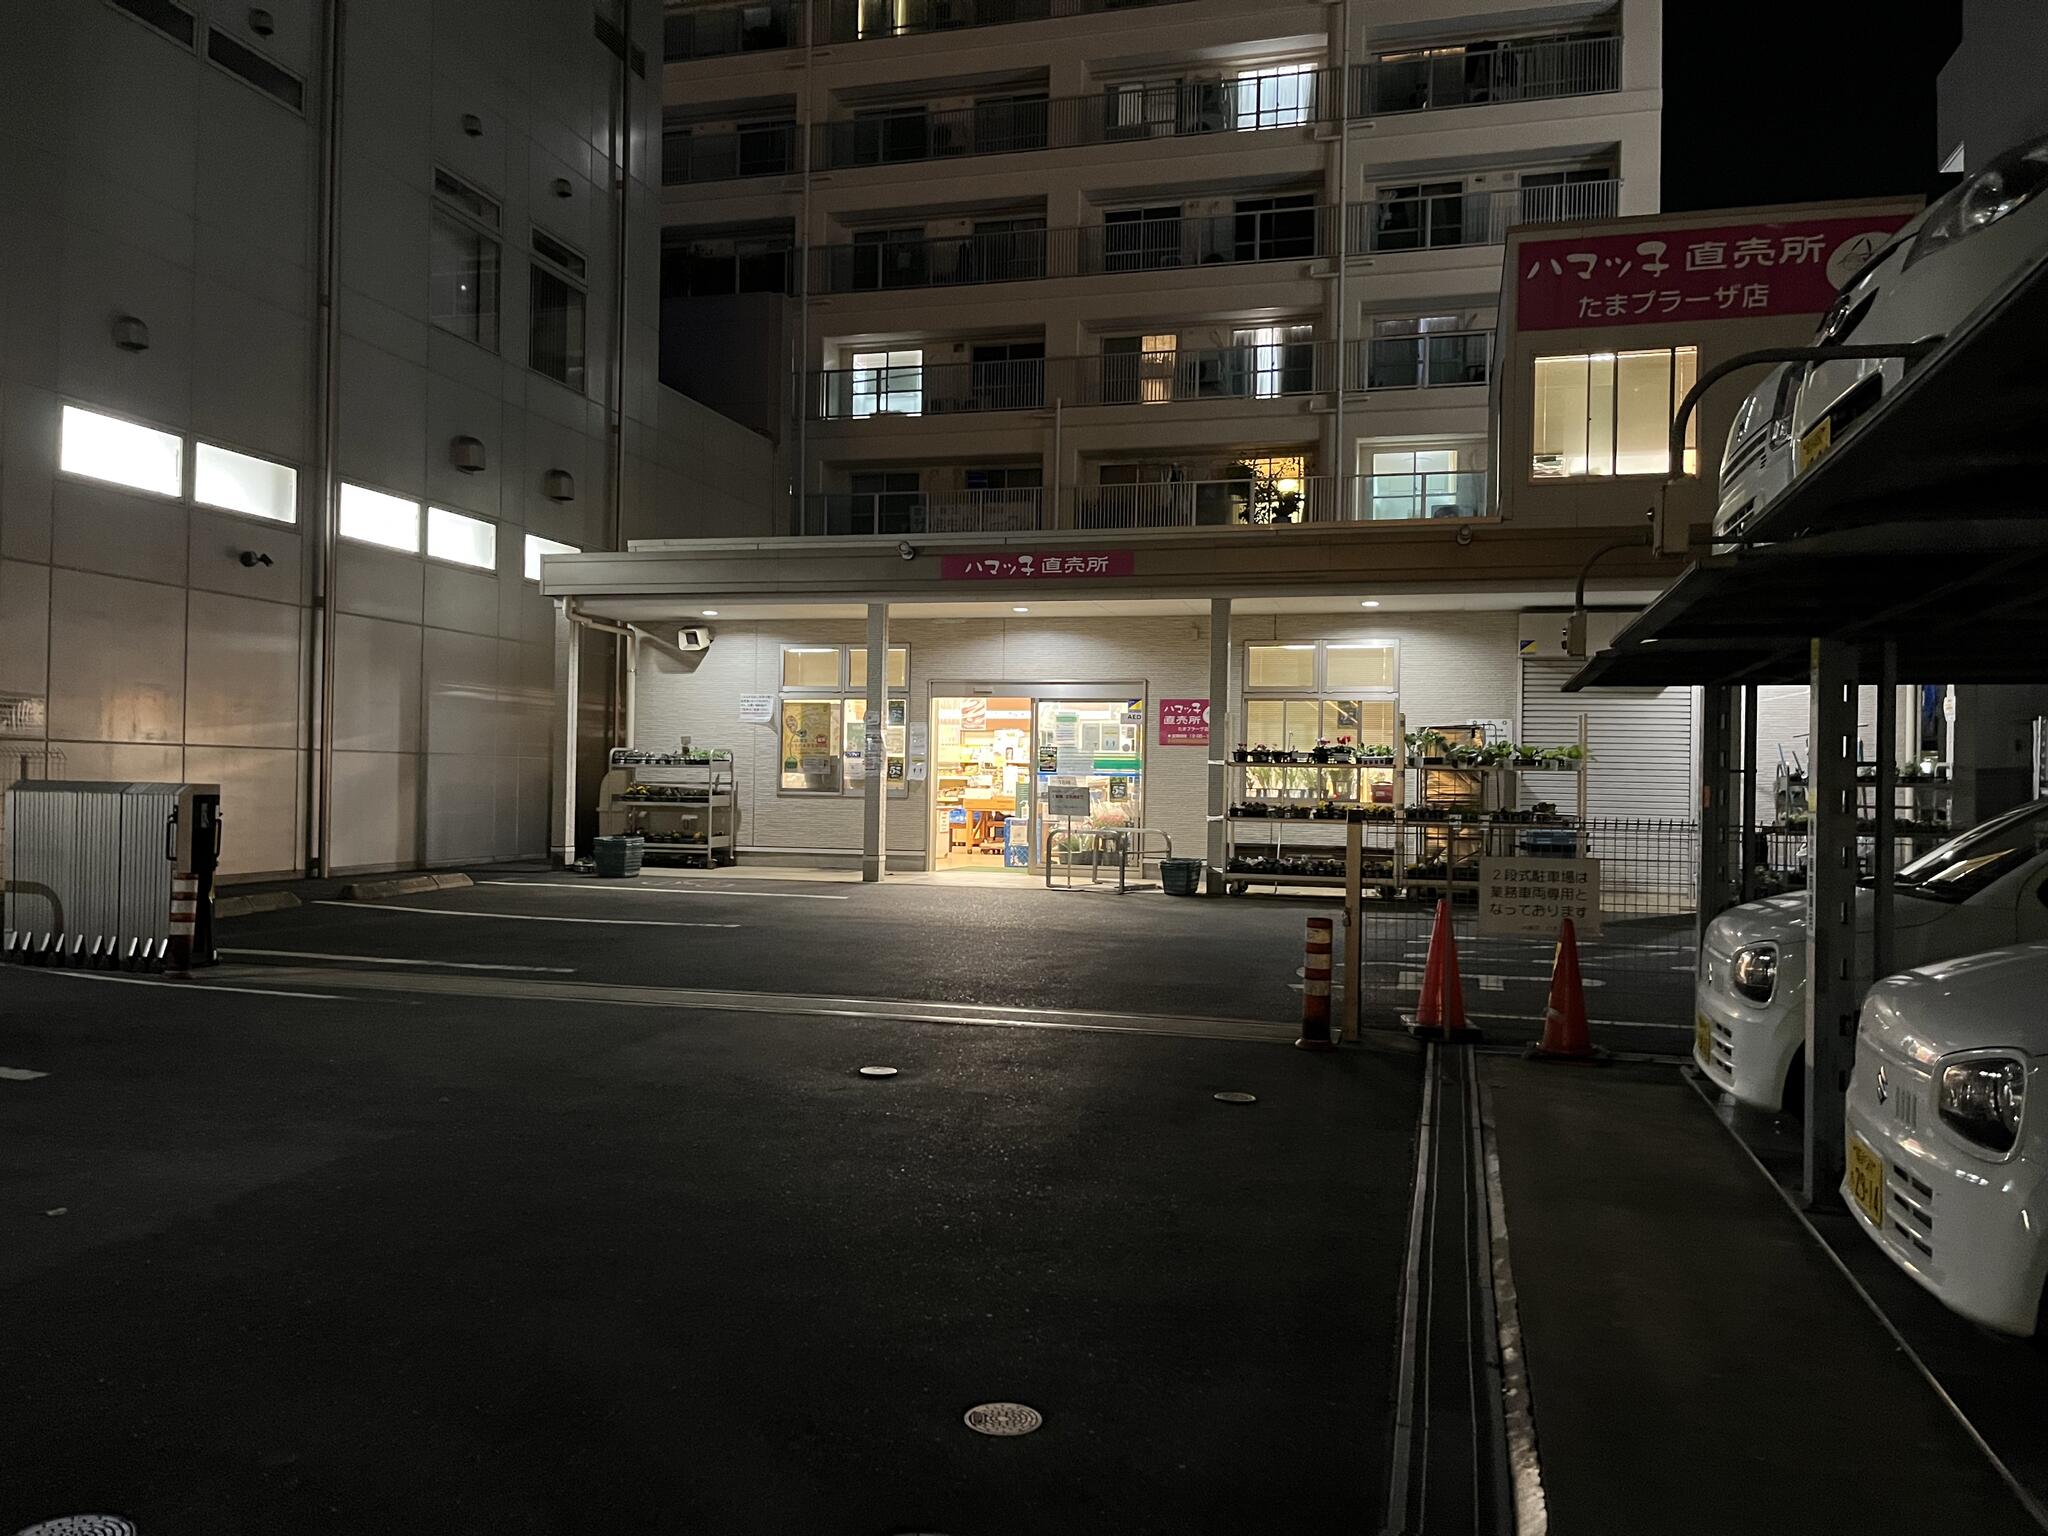 JA直売所 「ハマッ子」直売所 たまプラーザ店の代表写真2